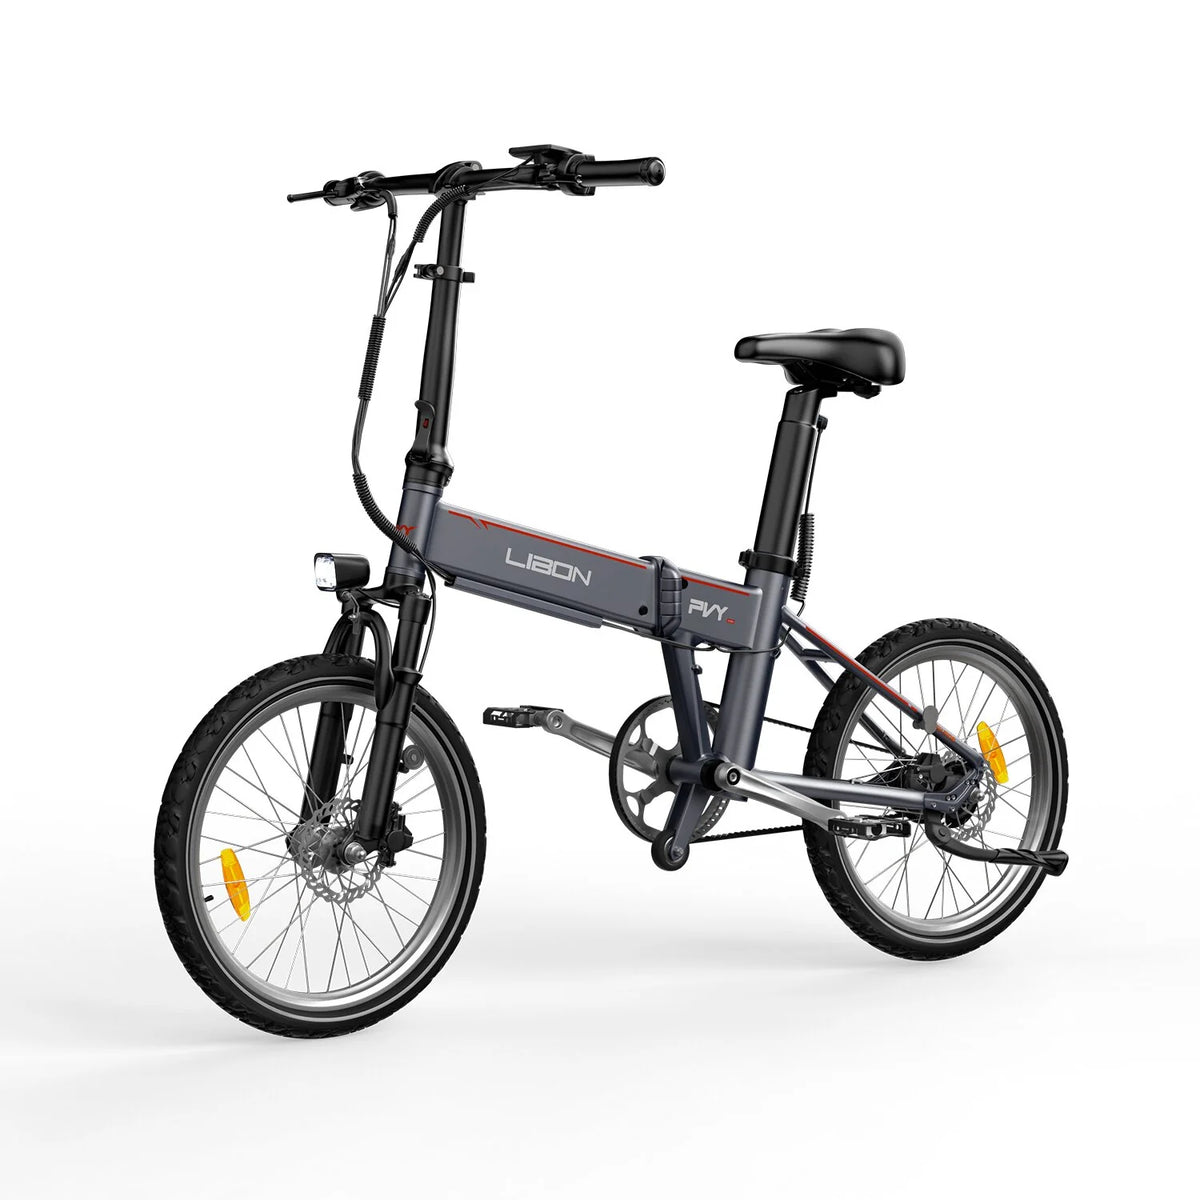 PVY Libon 10AH Bicicleta Elétrica - Potência 500W Bateria 36V10AH Autonomia 130KM Freios a Disco Hidráulicos - Cinza